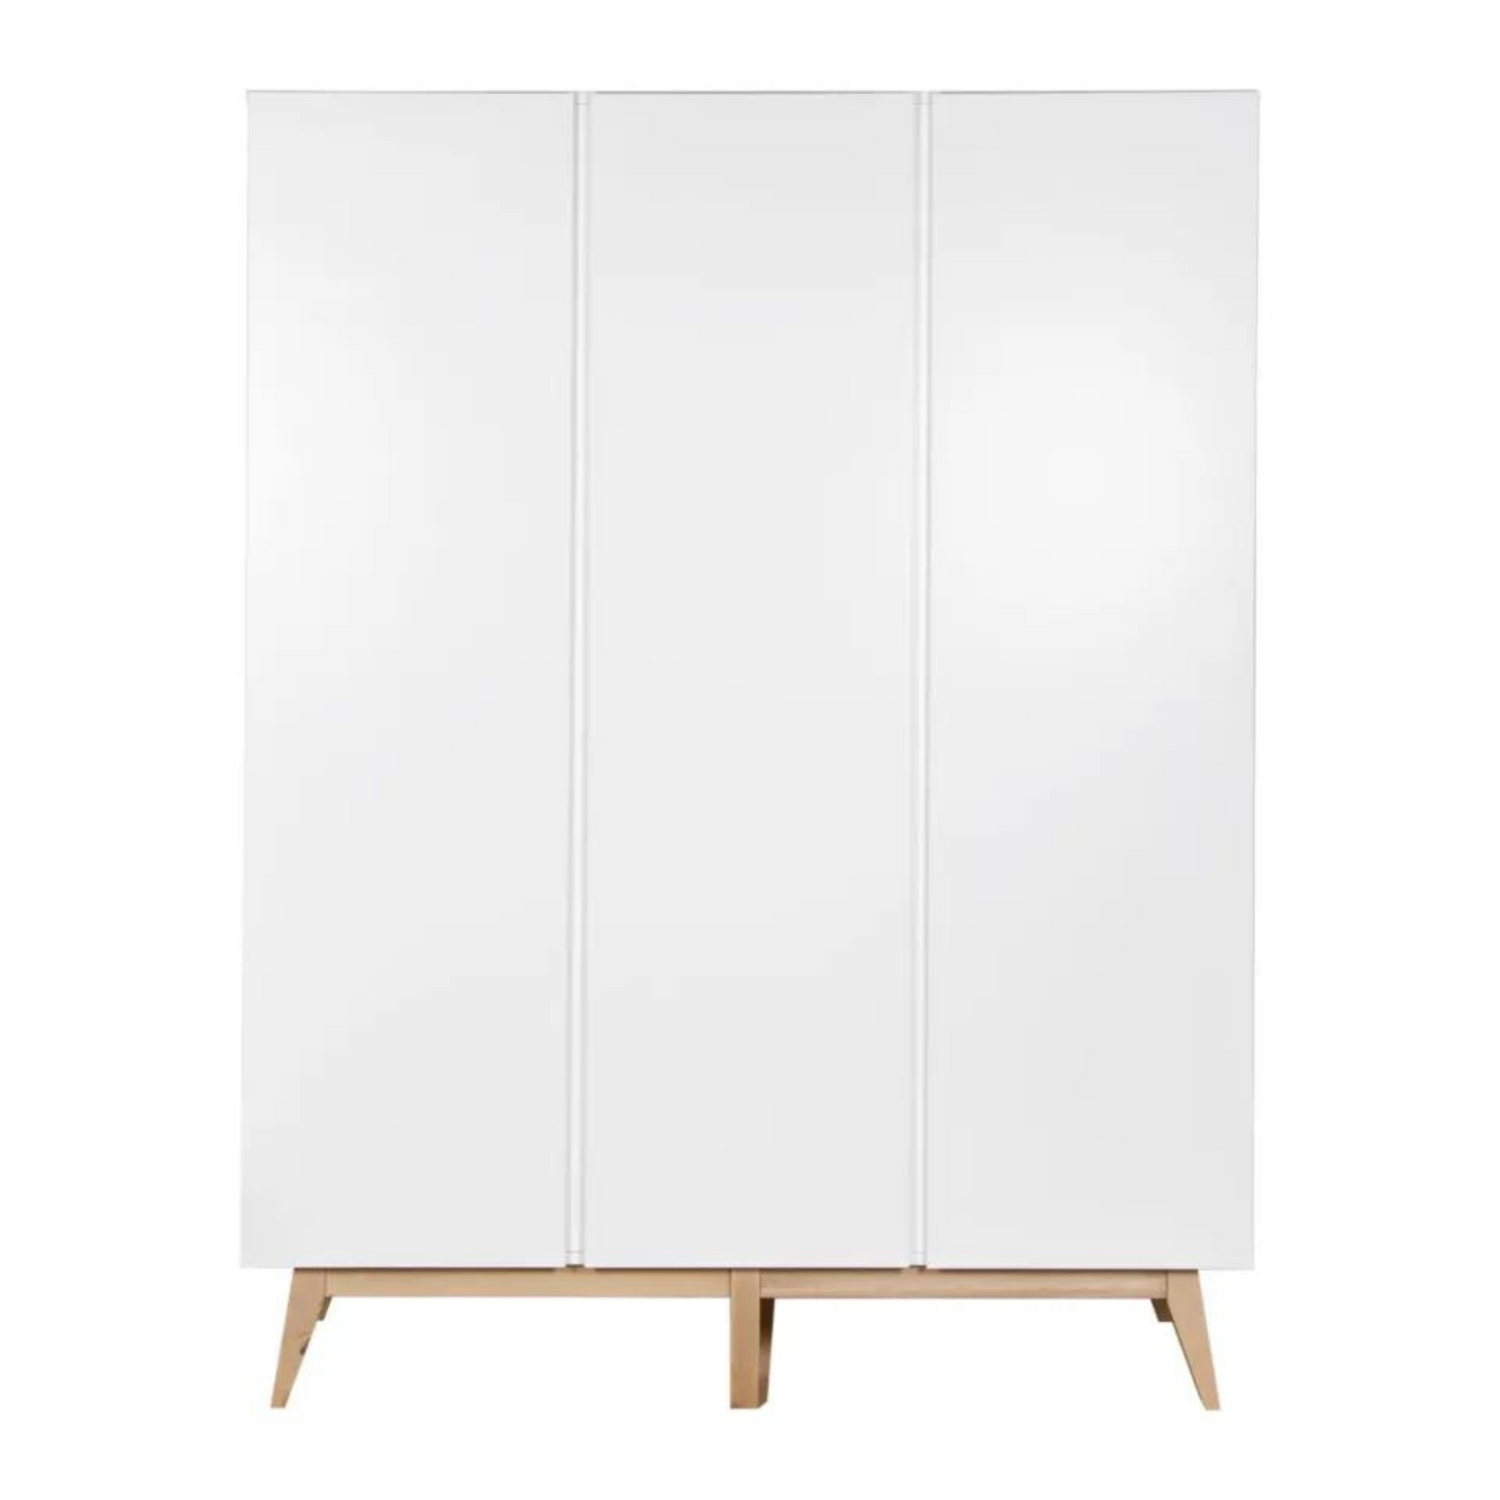 Quax cabinet Trendy White - 3 doors